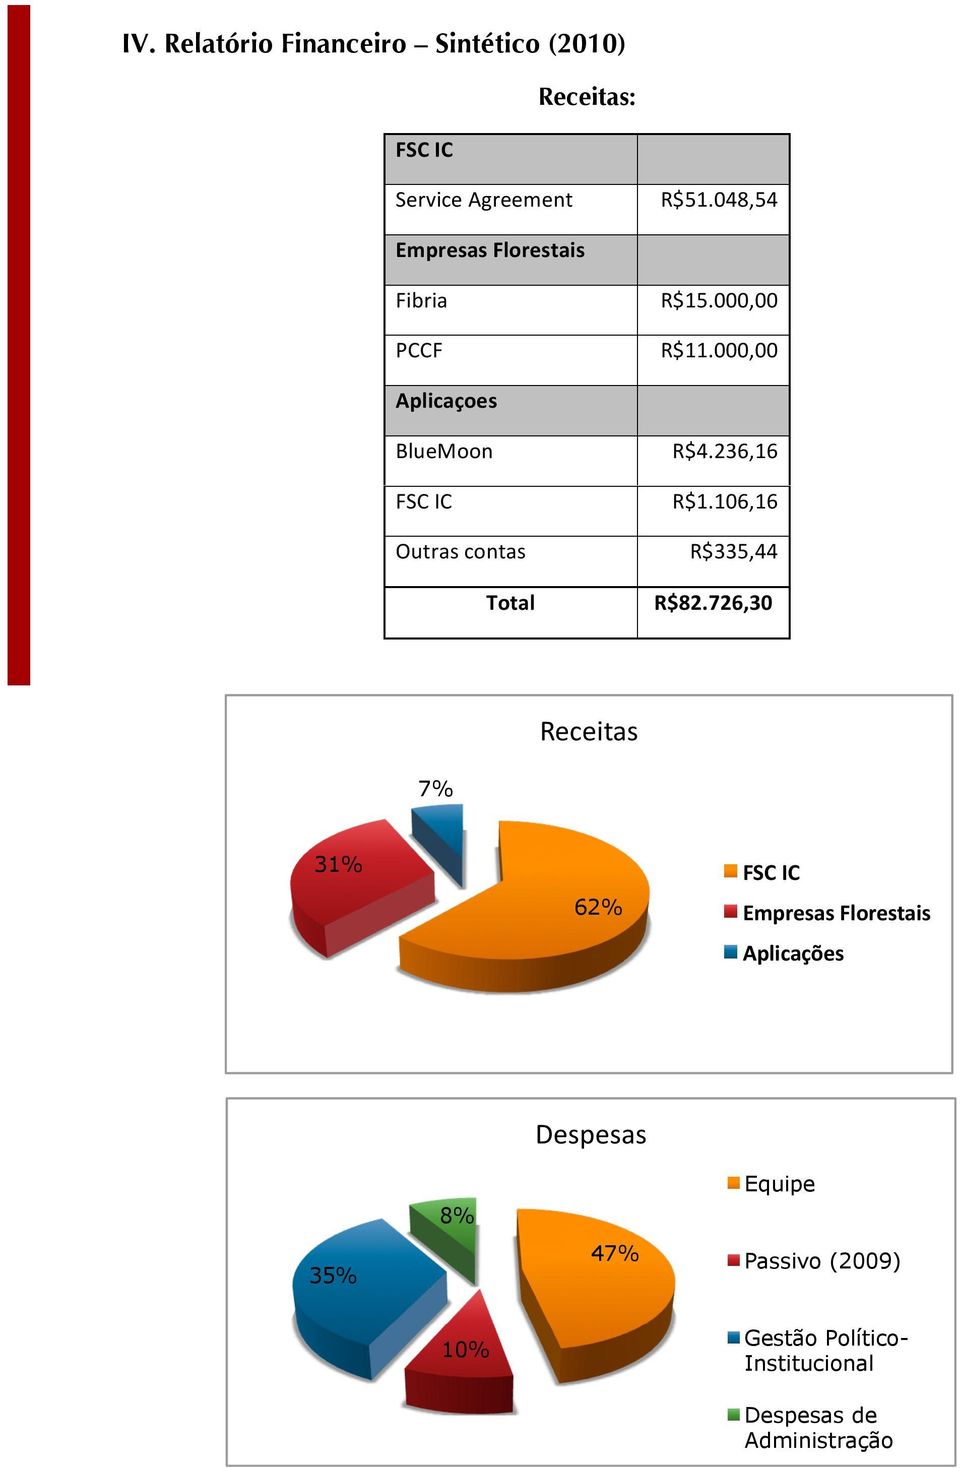 000,00 Aplicaçoes BlueMoon FSC IC Outras contas Total R$4.236,16 R$1.106,16 R$335,44 R$82.